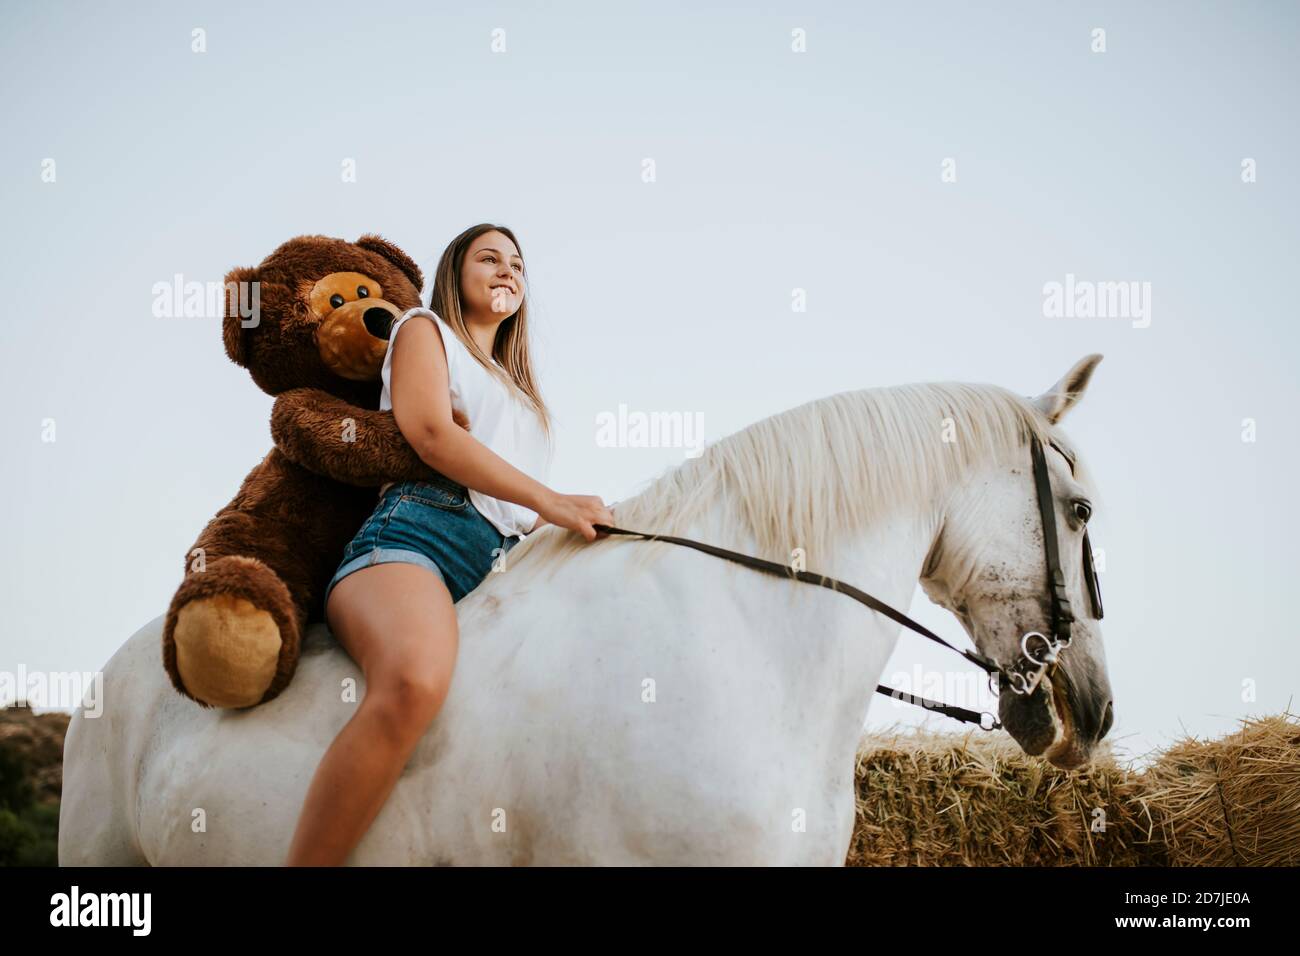 girl rides teddy bear xxx porn video pic